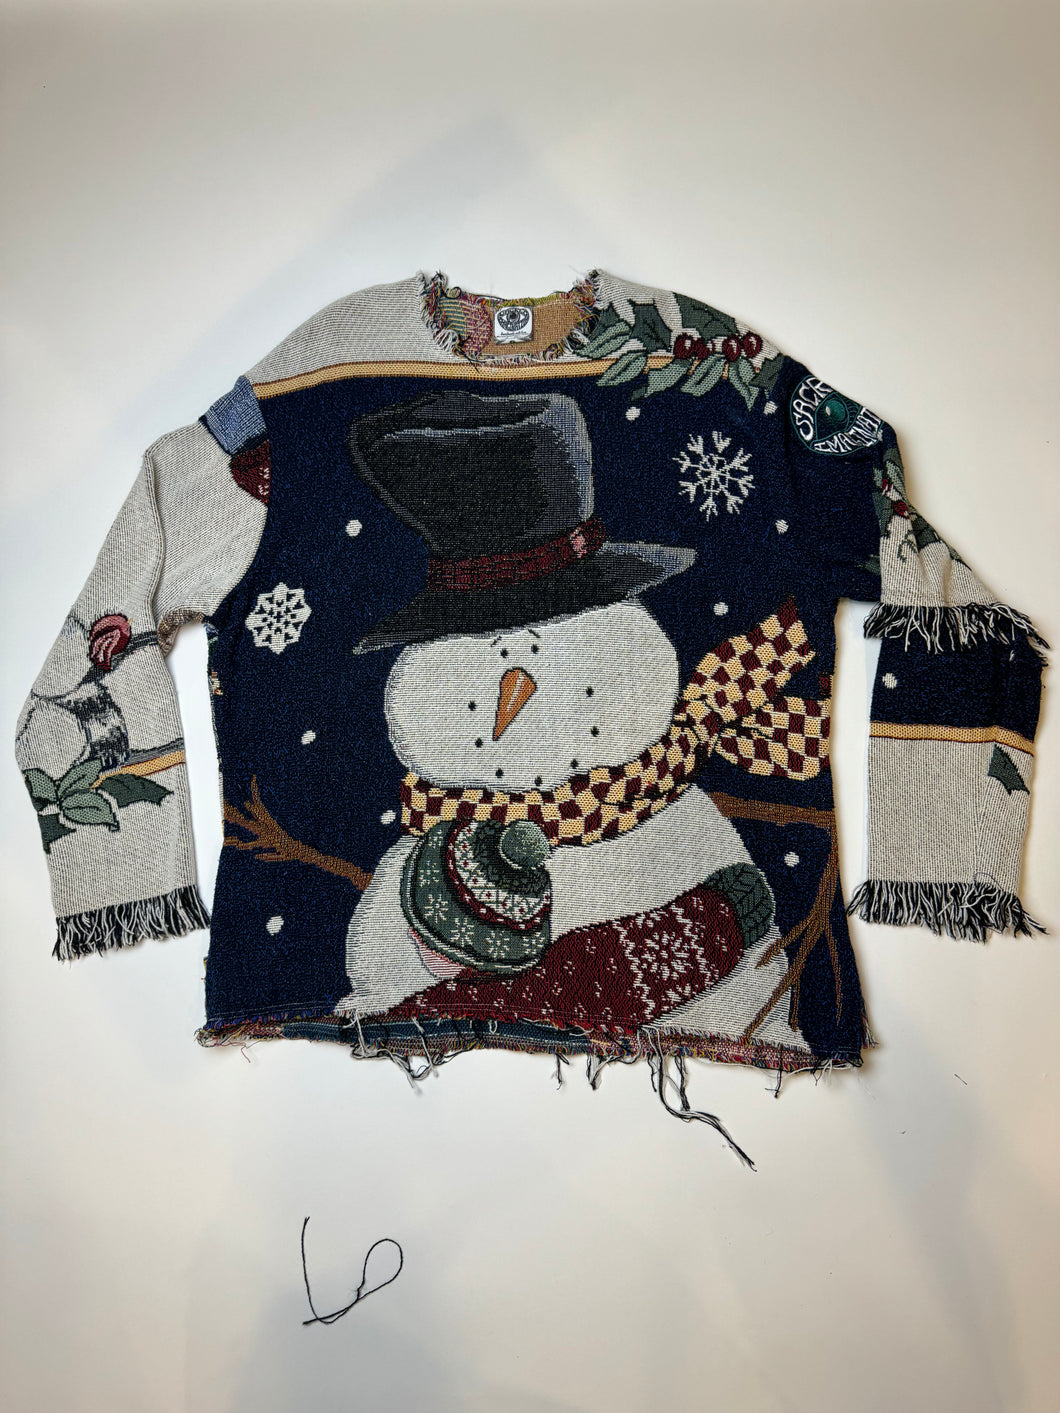 “Snowman” Blanket Sweater